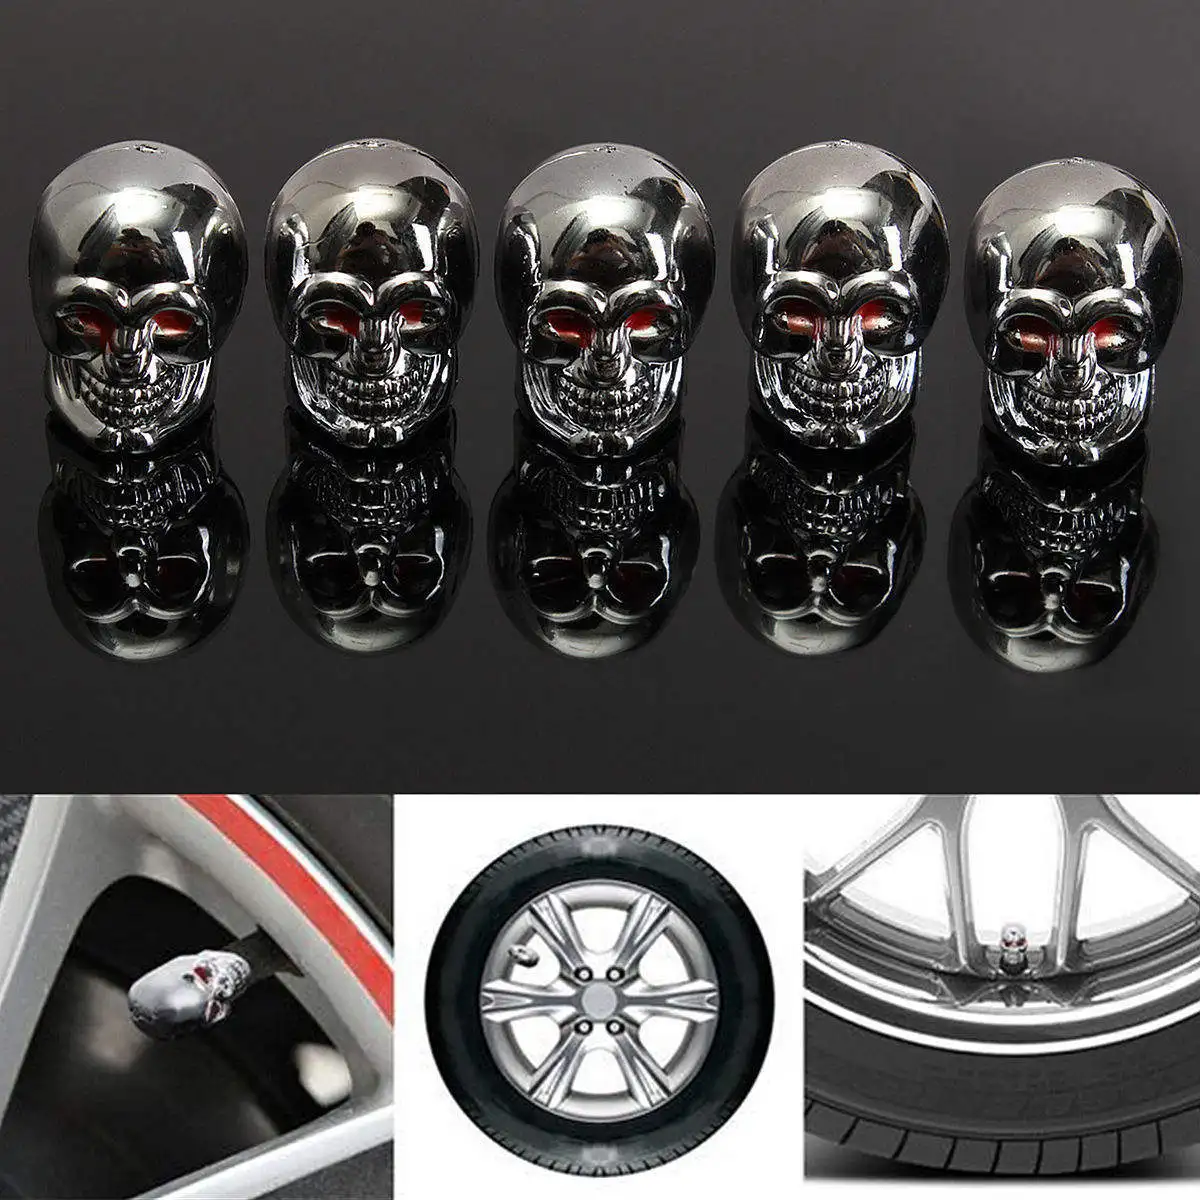 Punk Red Eyes Evil Skull Tyre Tire Air Valve Stem Caps Dust Cover for Car Bike Truck Motorcycle Pack of 5pcs